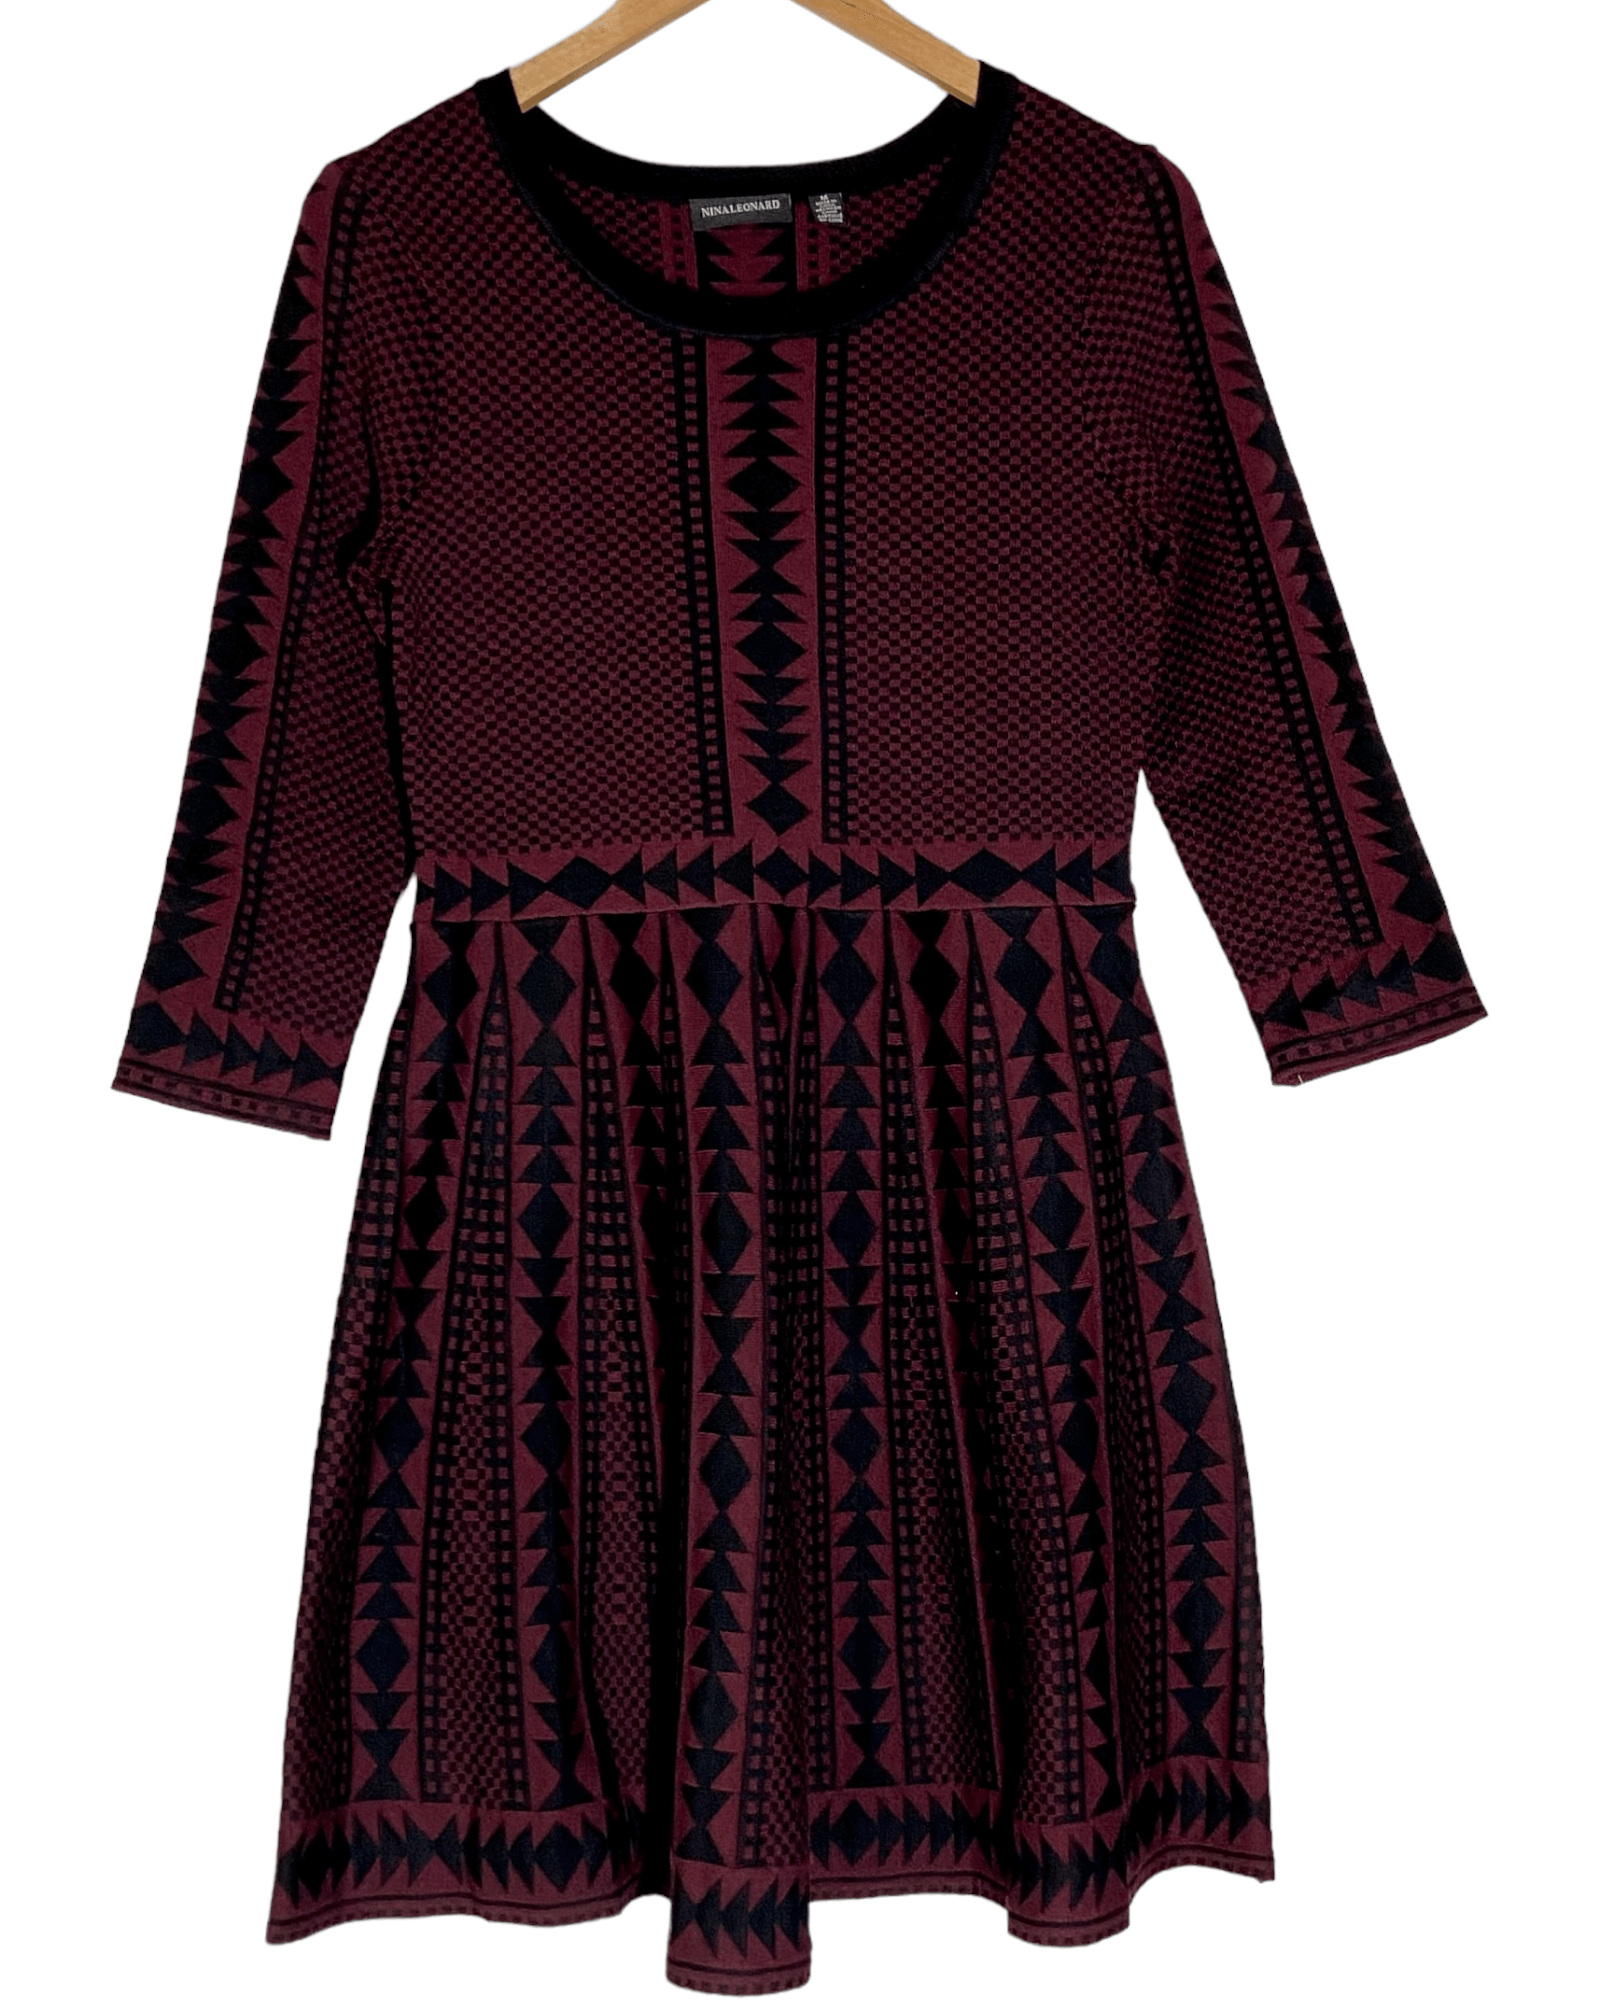 Dark Winter NINA LEONARD geometric print sweater dress